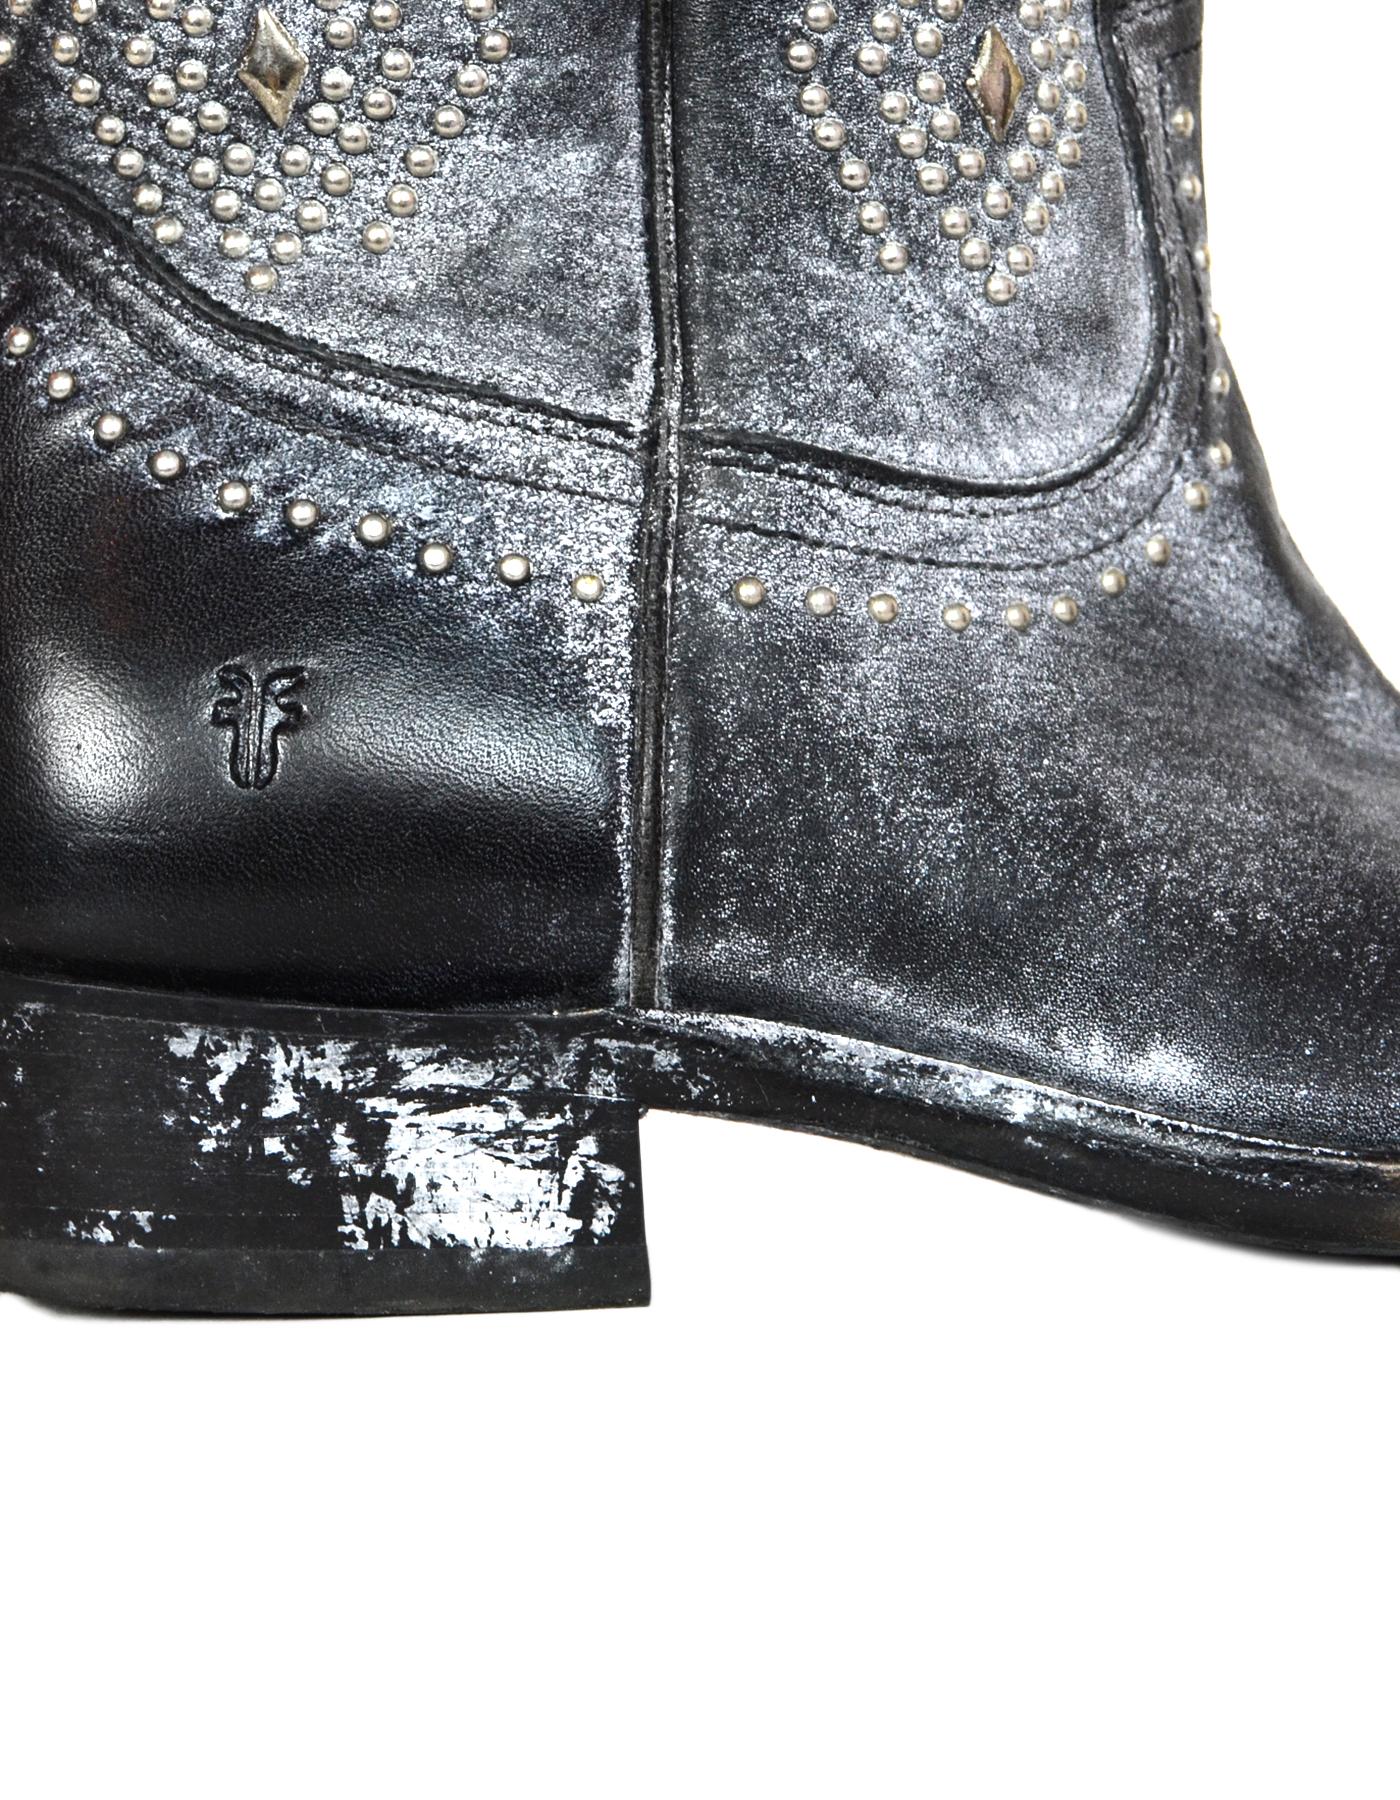 Frye Black Leather Billy Studded Short Boots Sz 5.5 2